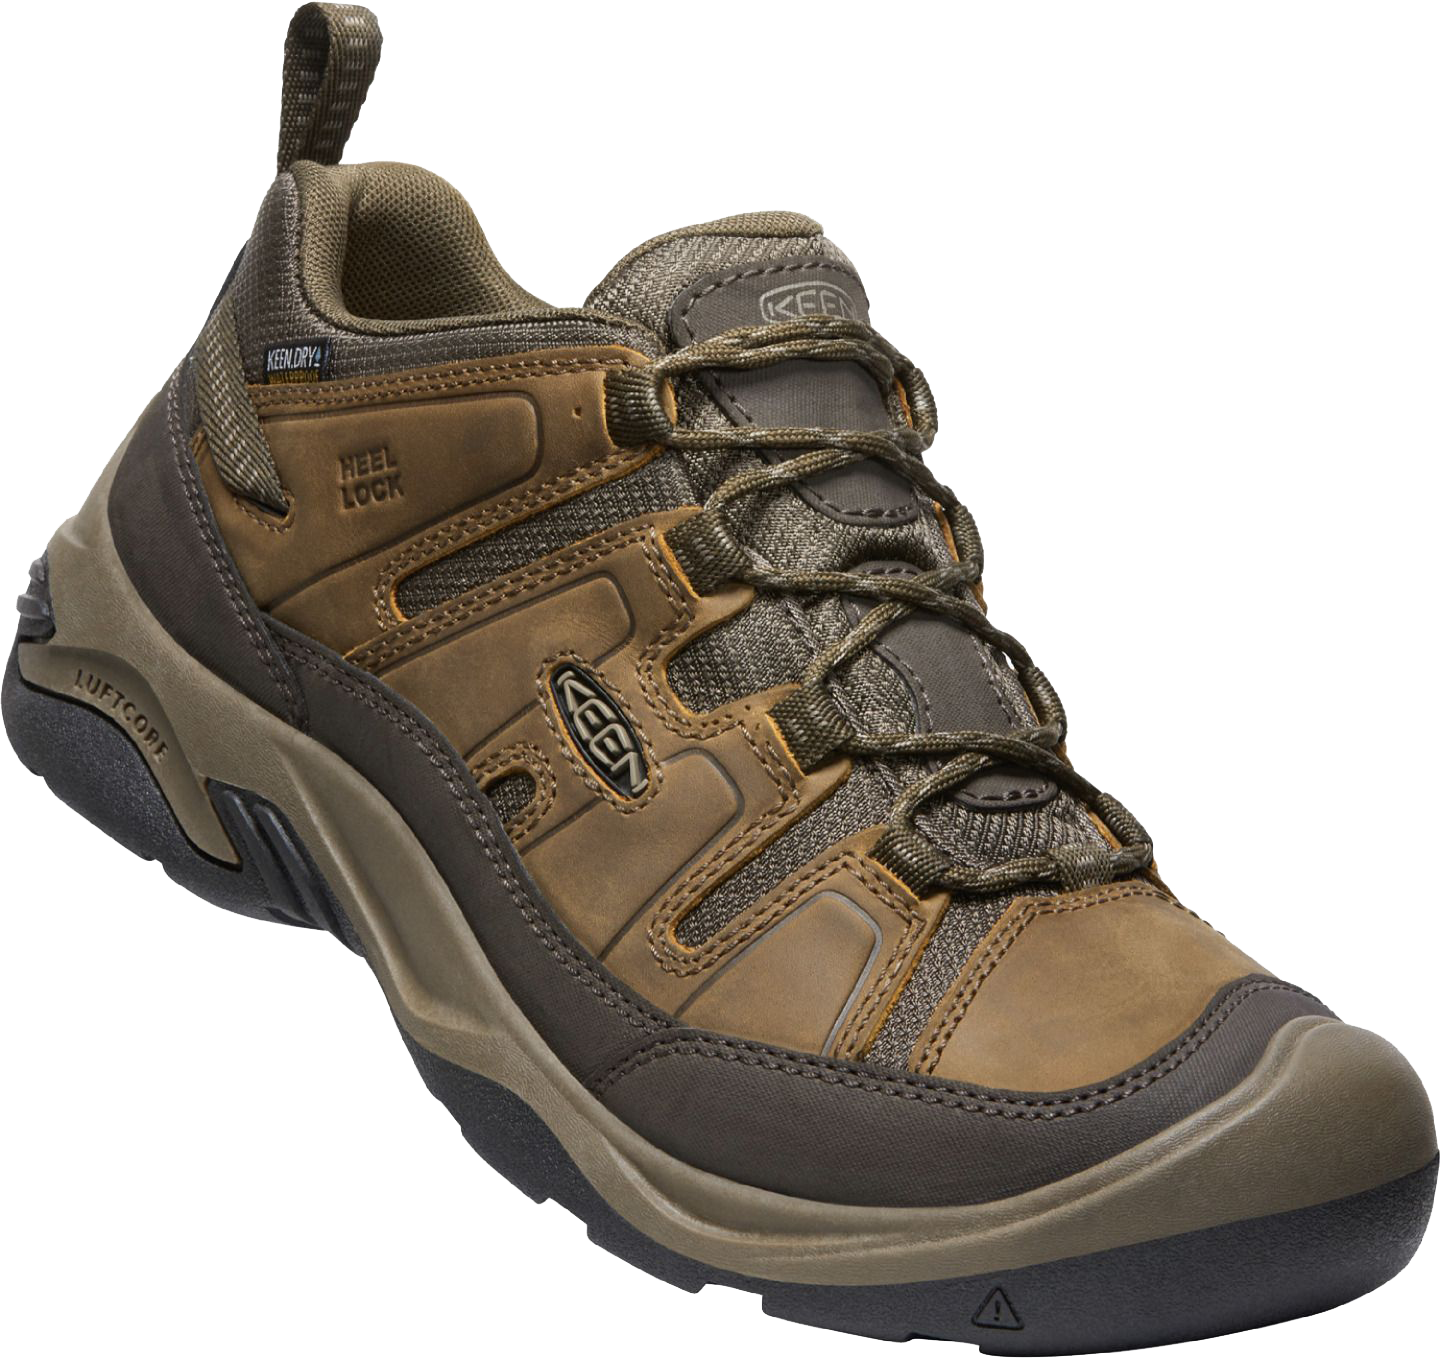 KEEN Circadia Low WP Waterproof Hiking Shoes for Men - Shitake/Brindle - 9.5W